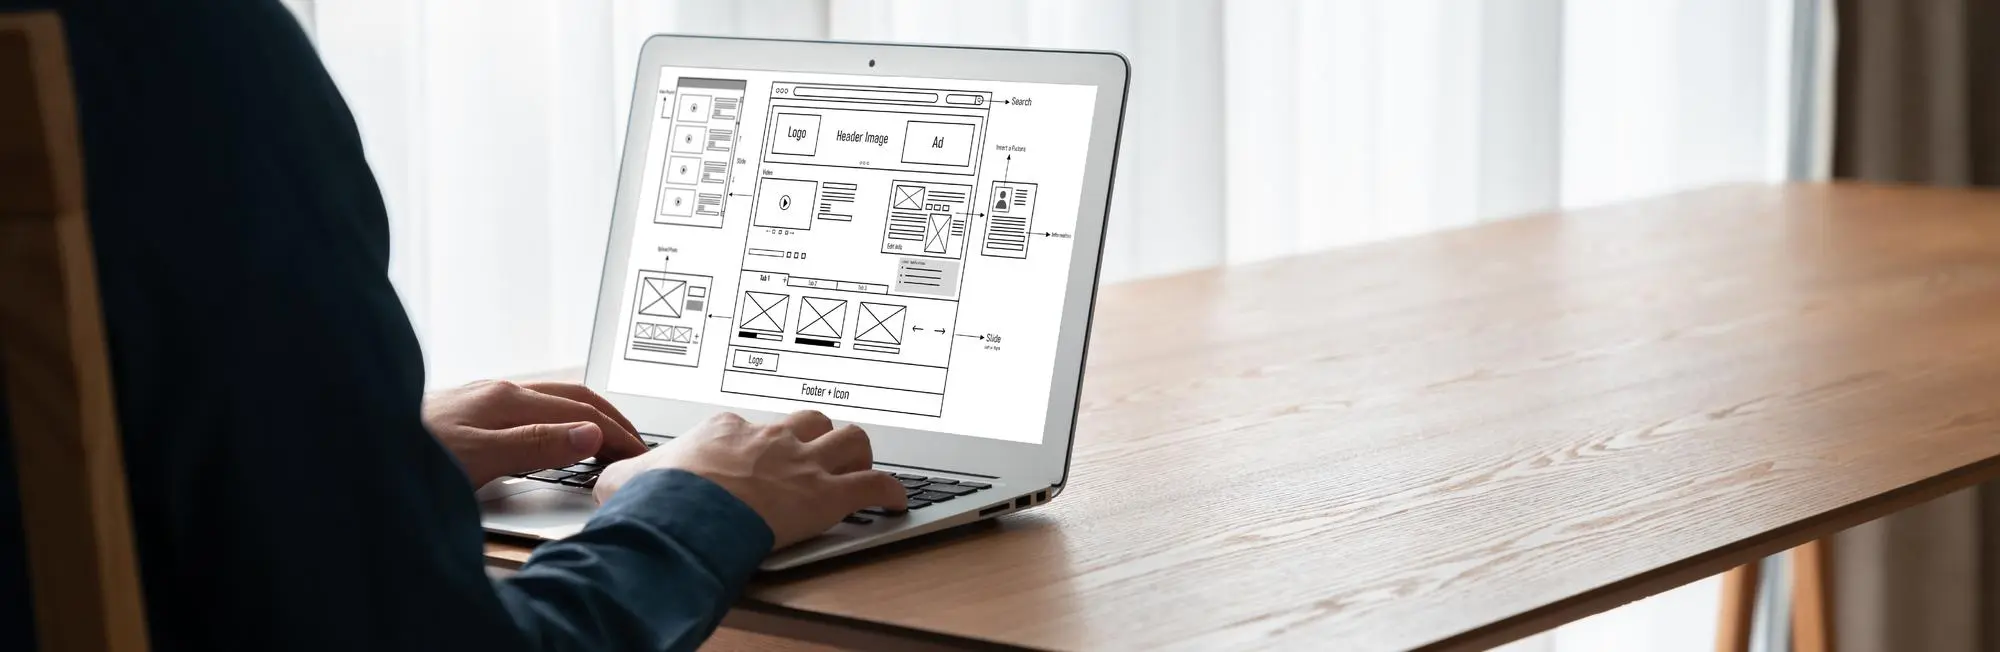 website design software provide modish template online retail business Interwebsite Webbyrå